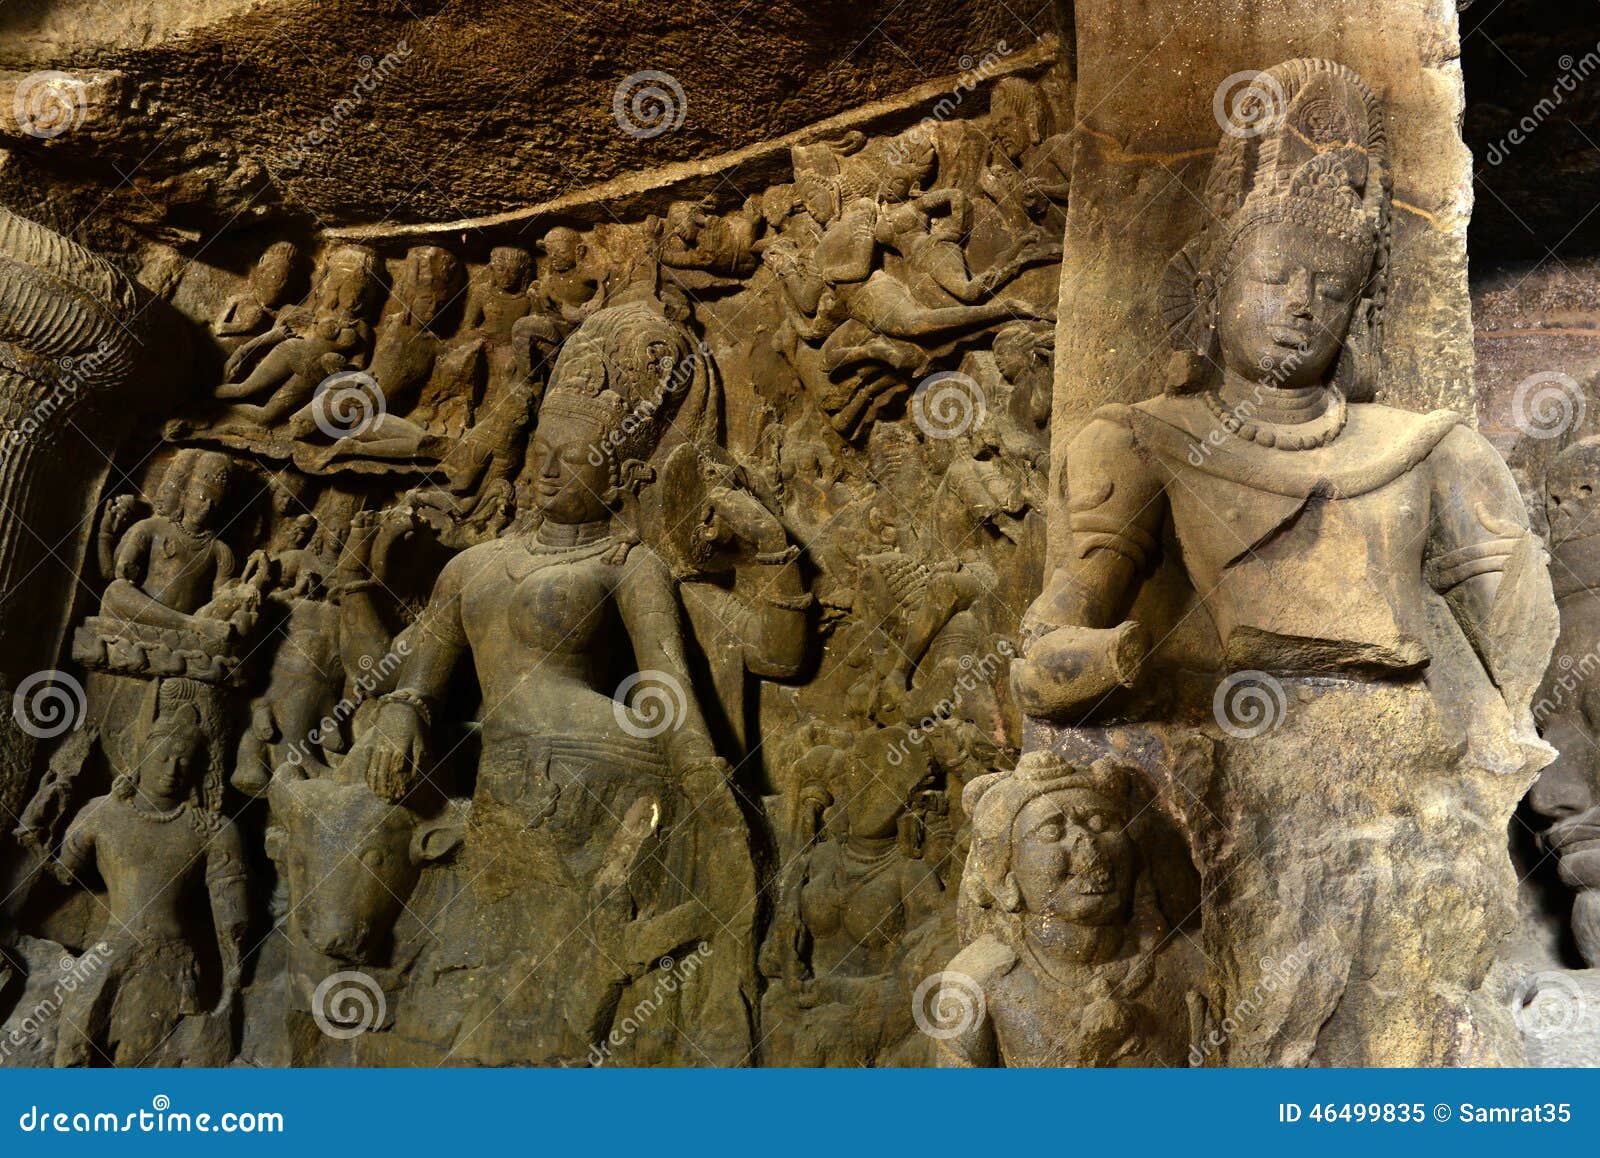 ancient sculptures